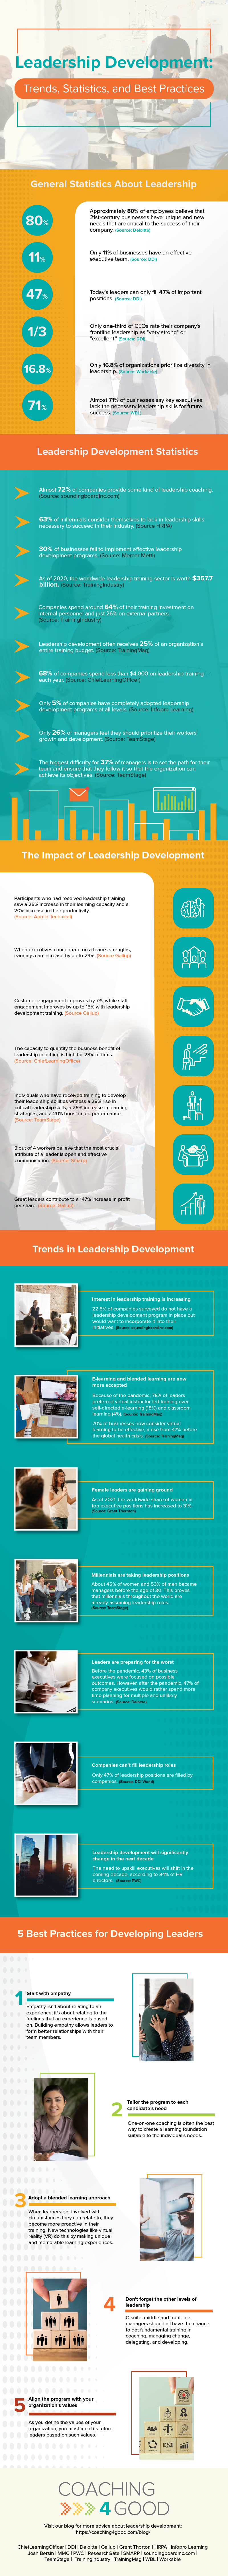 leadership development trends and statistics